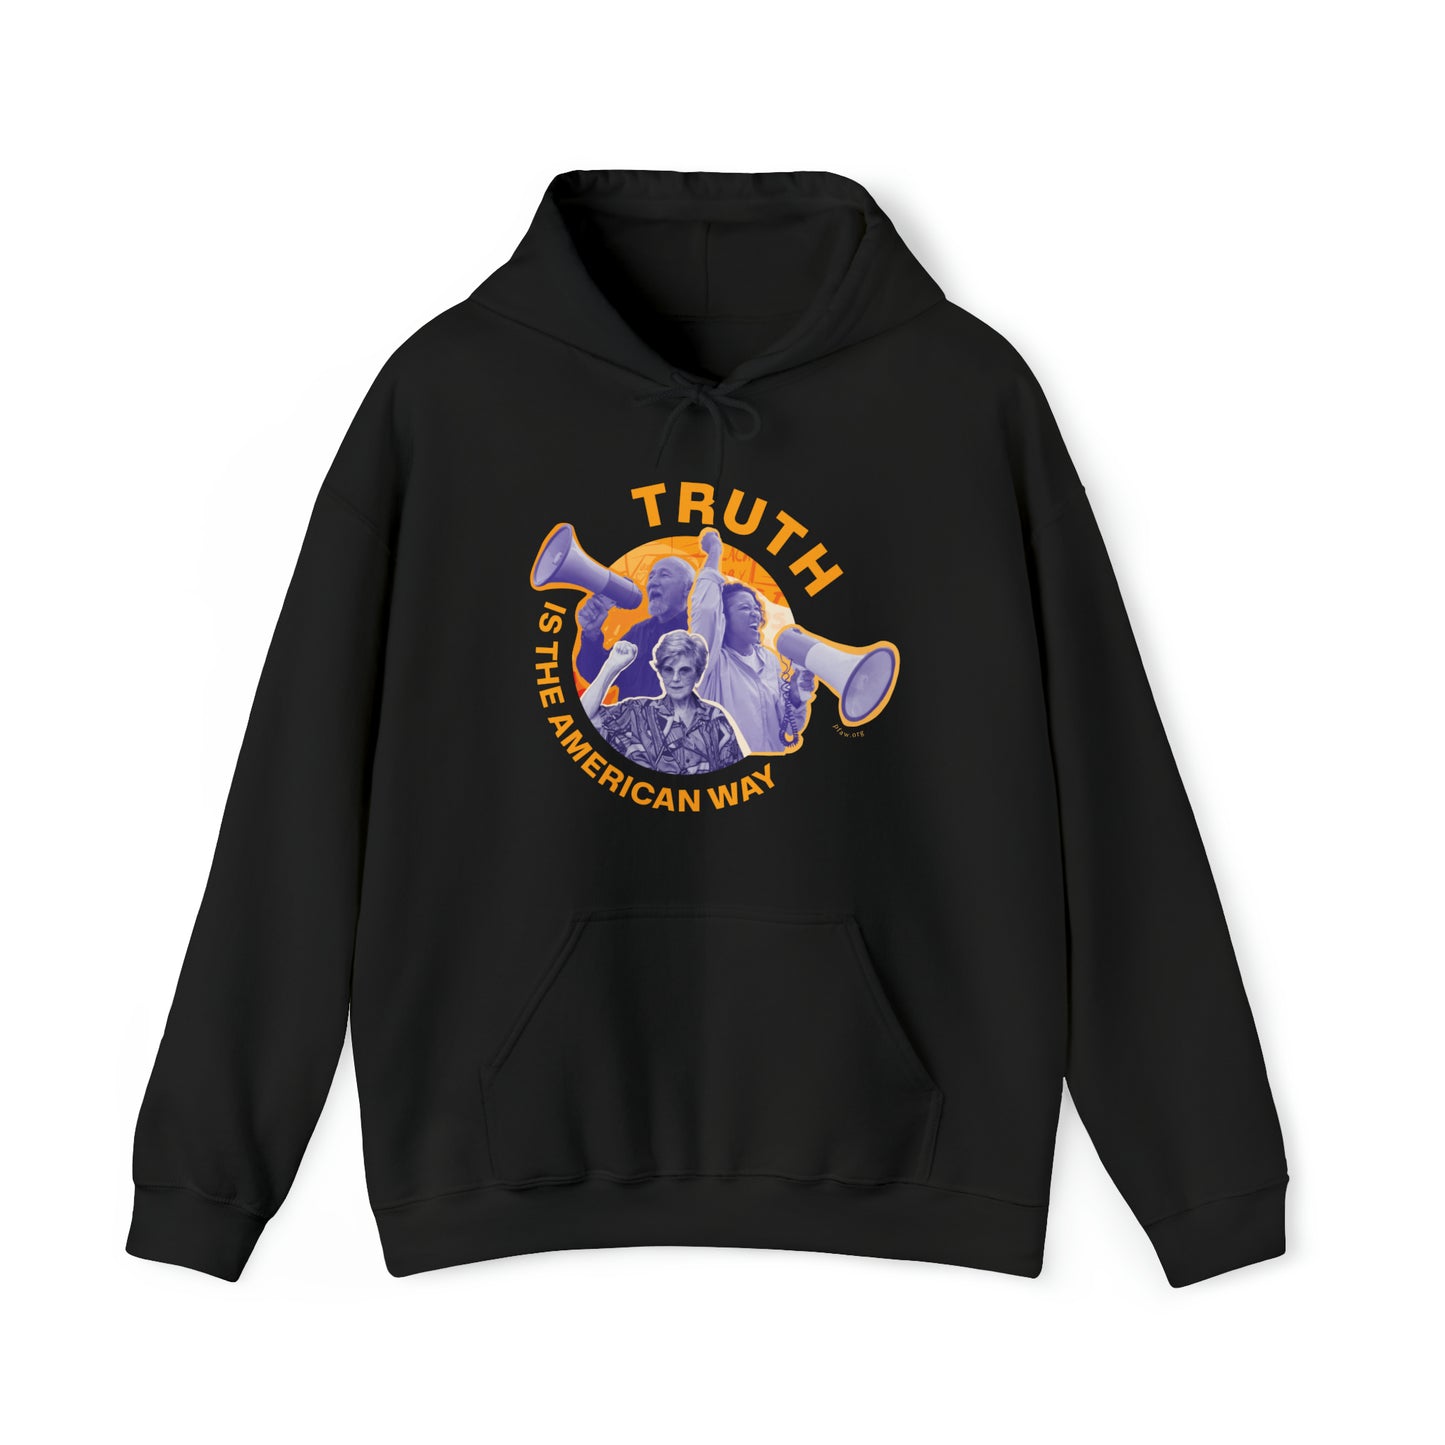 Truth is the American Way Hooded Sweatshirt